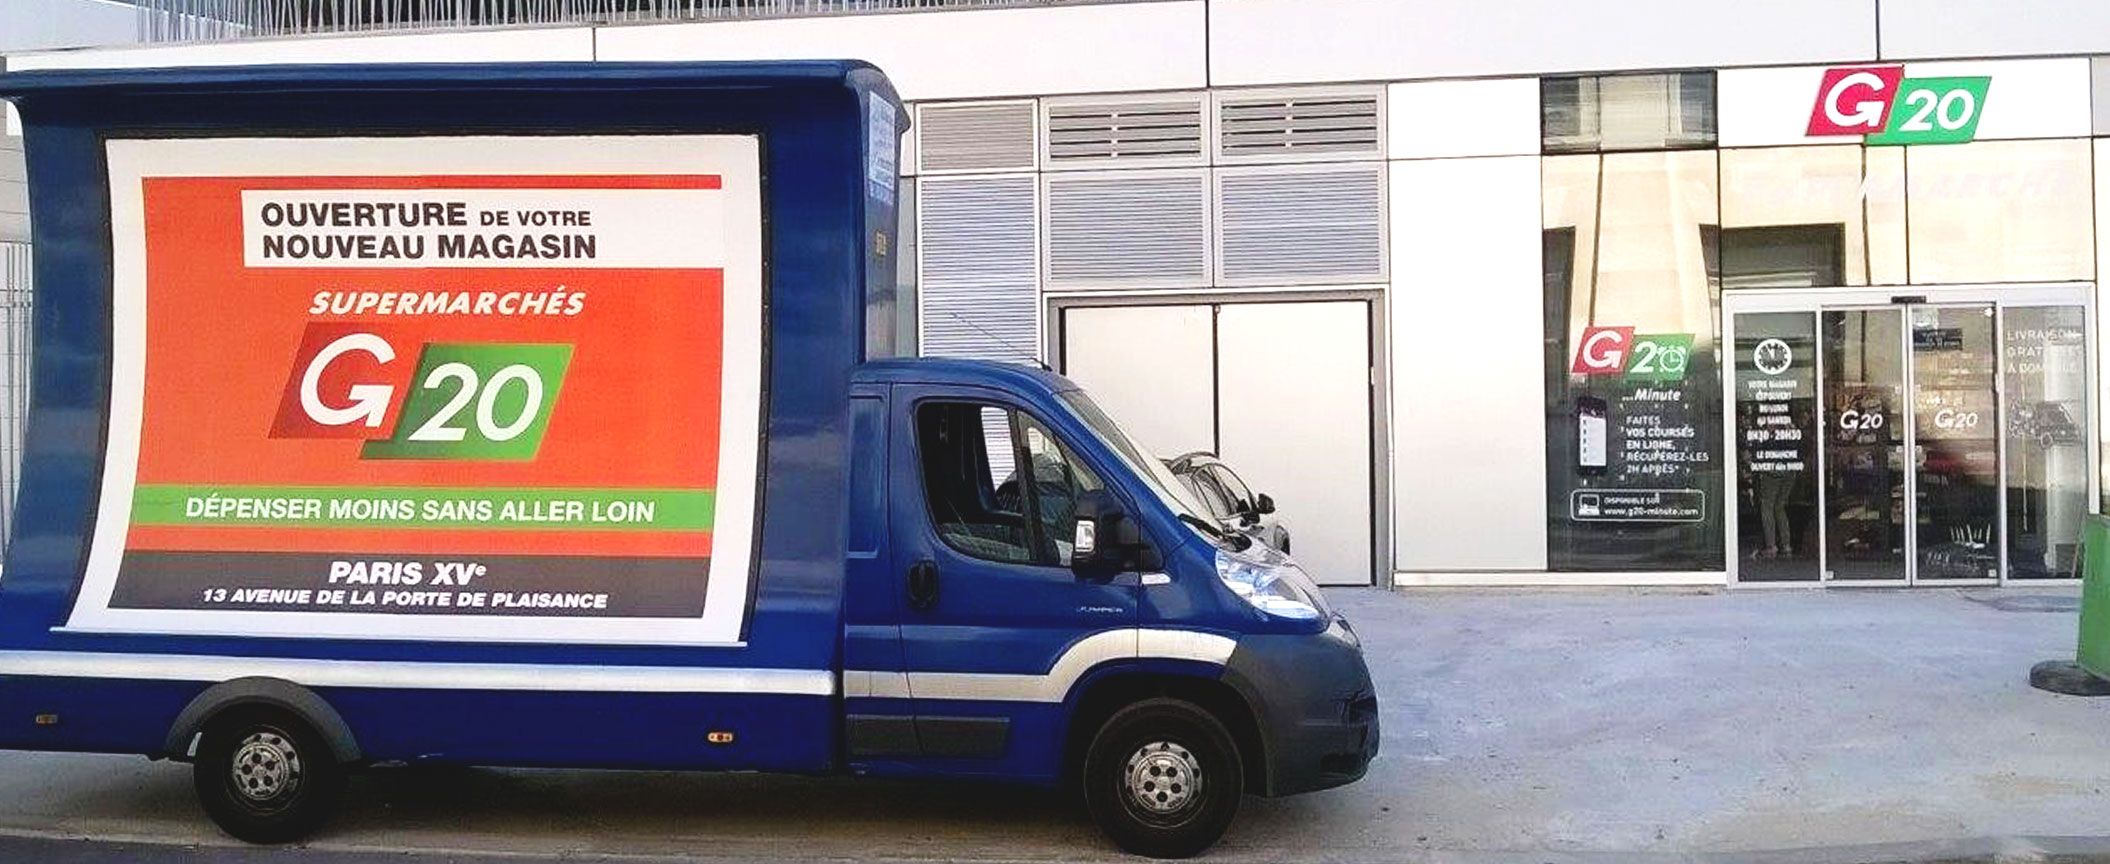 rivierapub_street-marketing-nice-camion-publicitaire